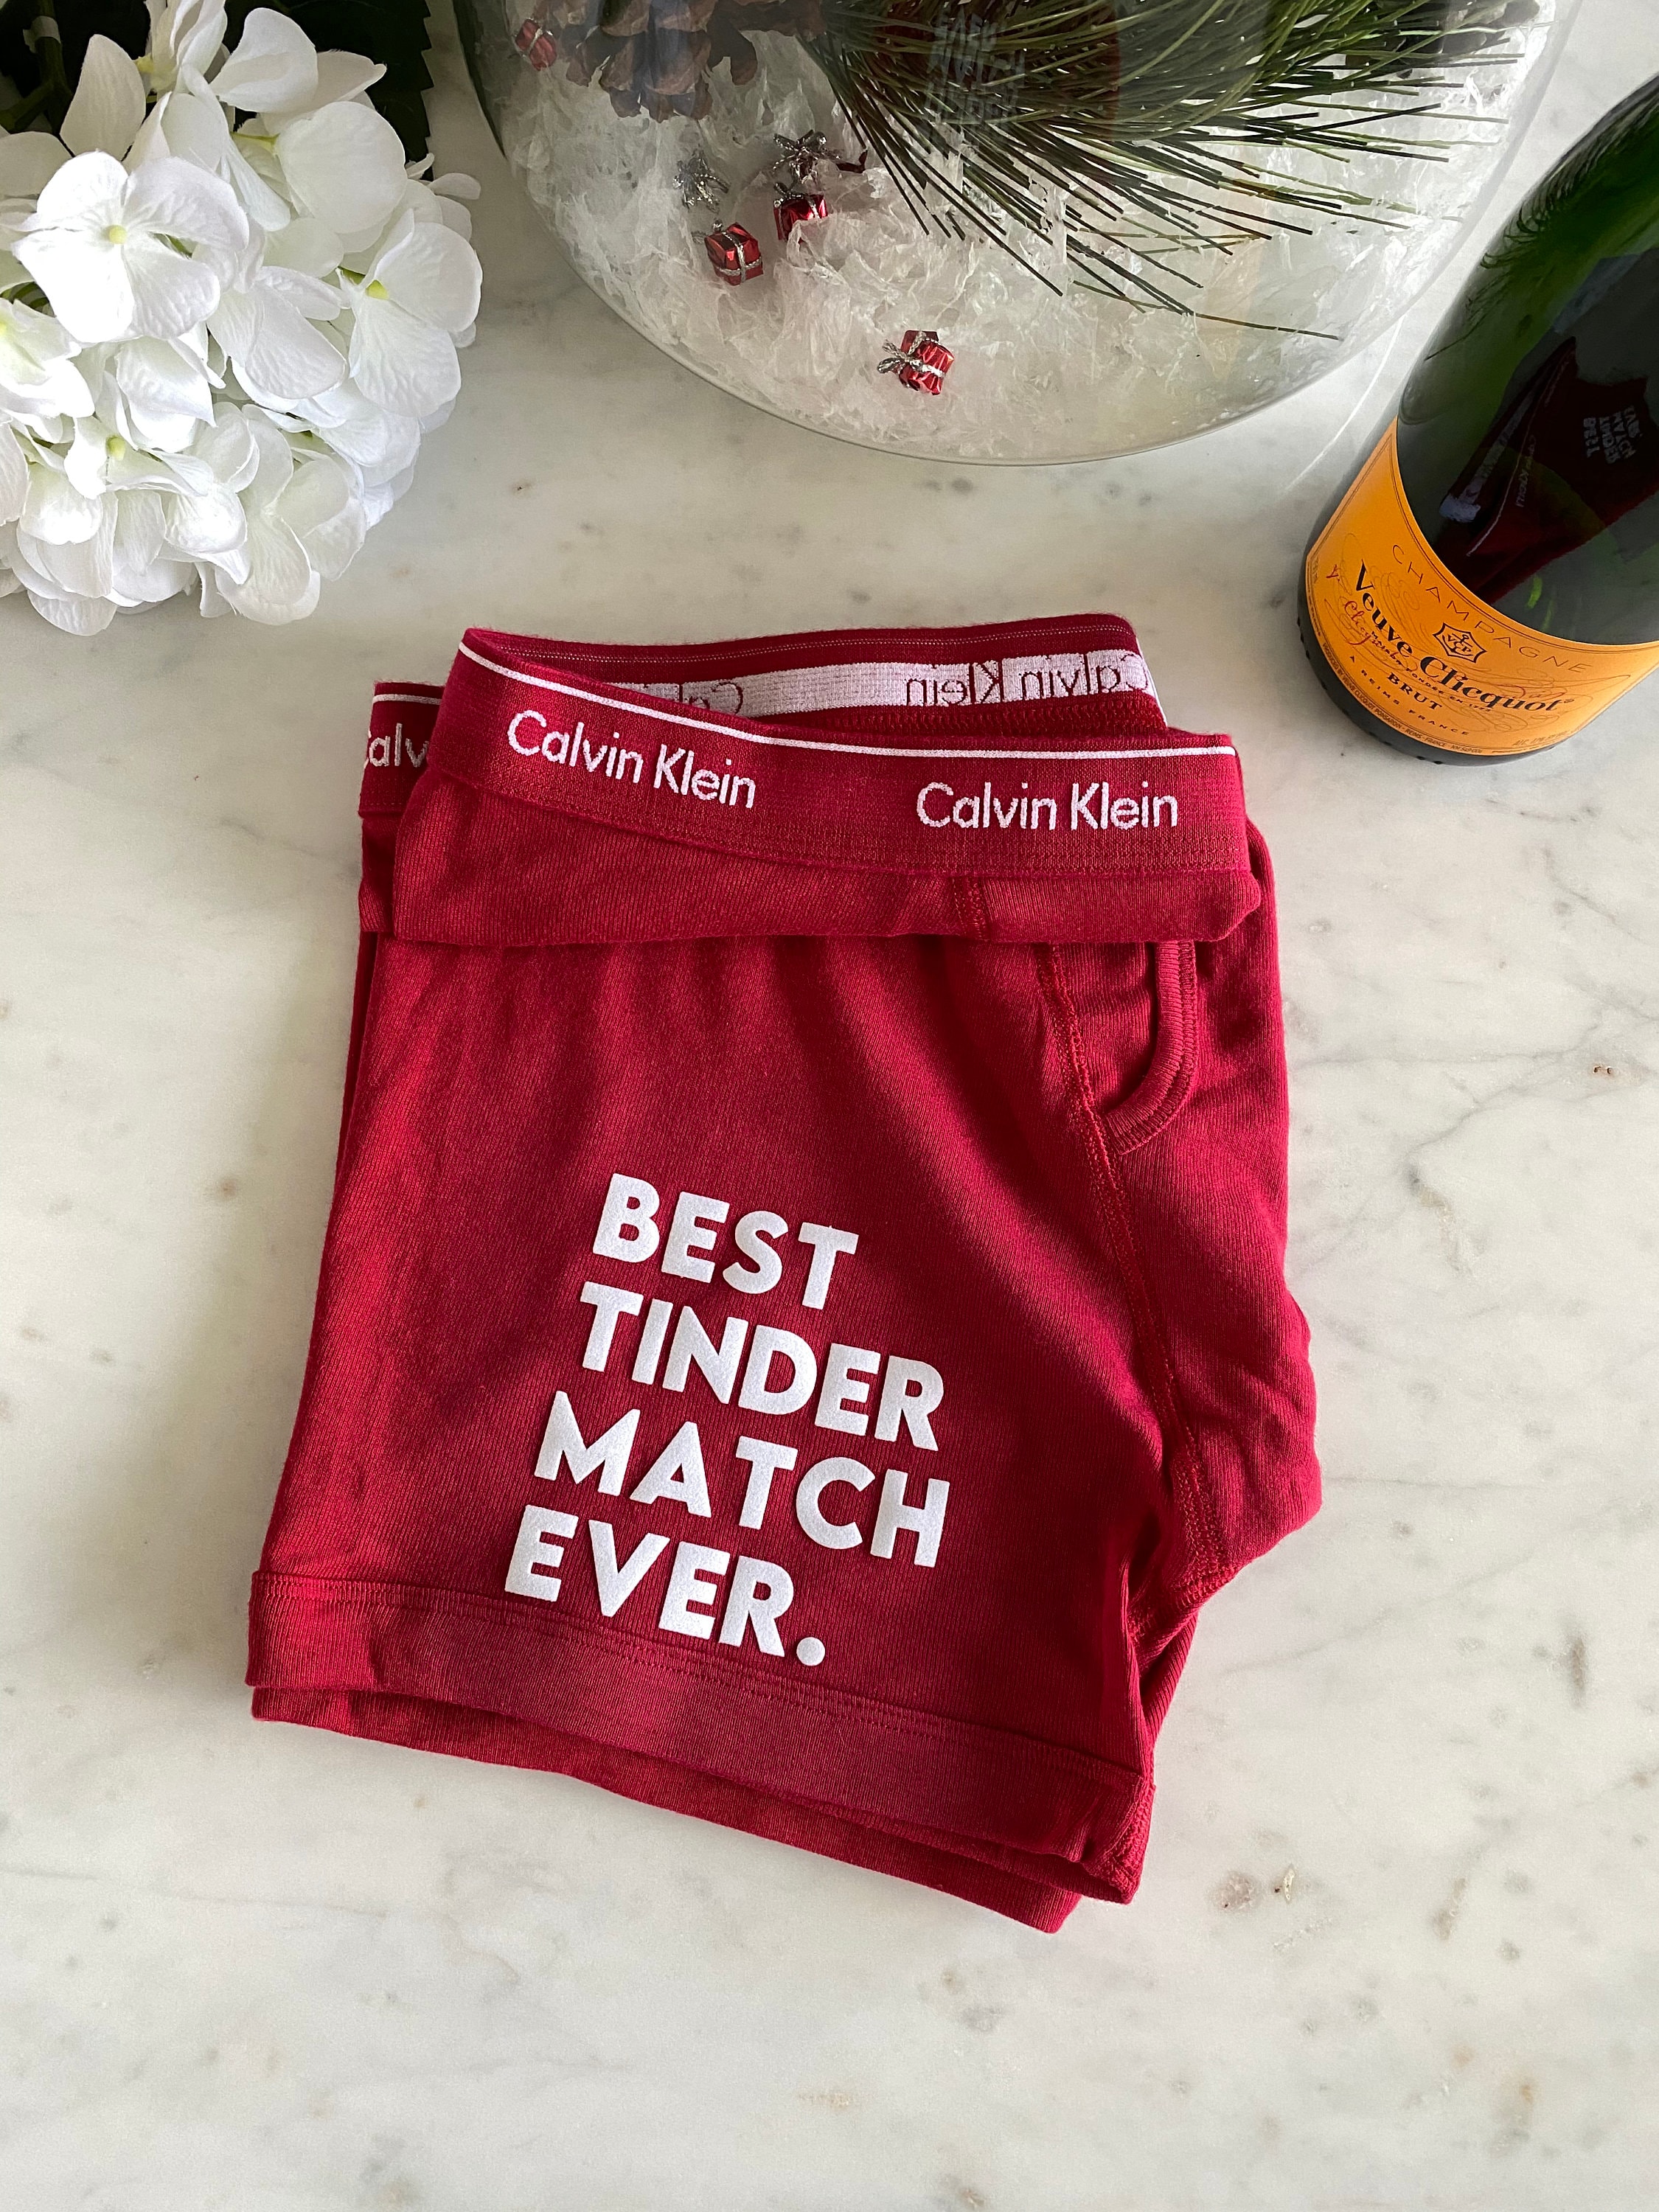 Best Tinder Match Ever Red Calvin Klein Boxer Brief, Fast Shipping,  Anniversary Gift, Cotton Anniversary, Personalized Underwear,  Sale